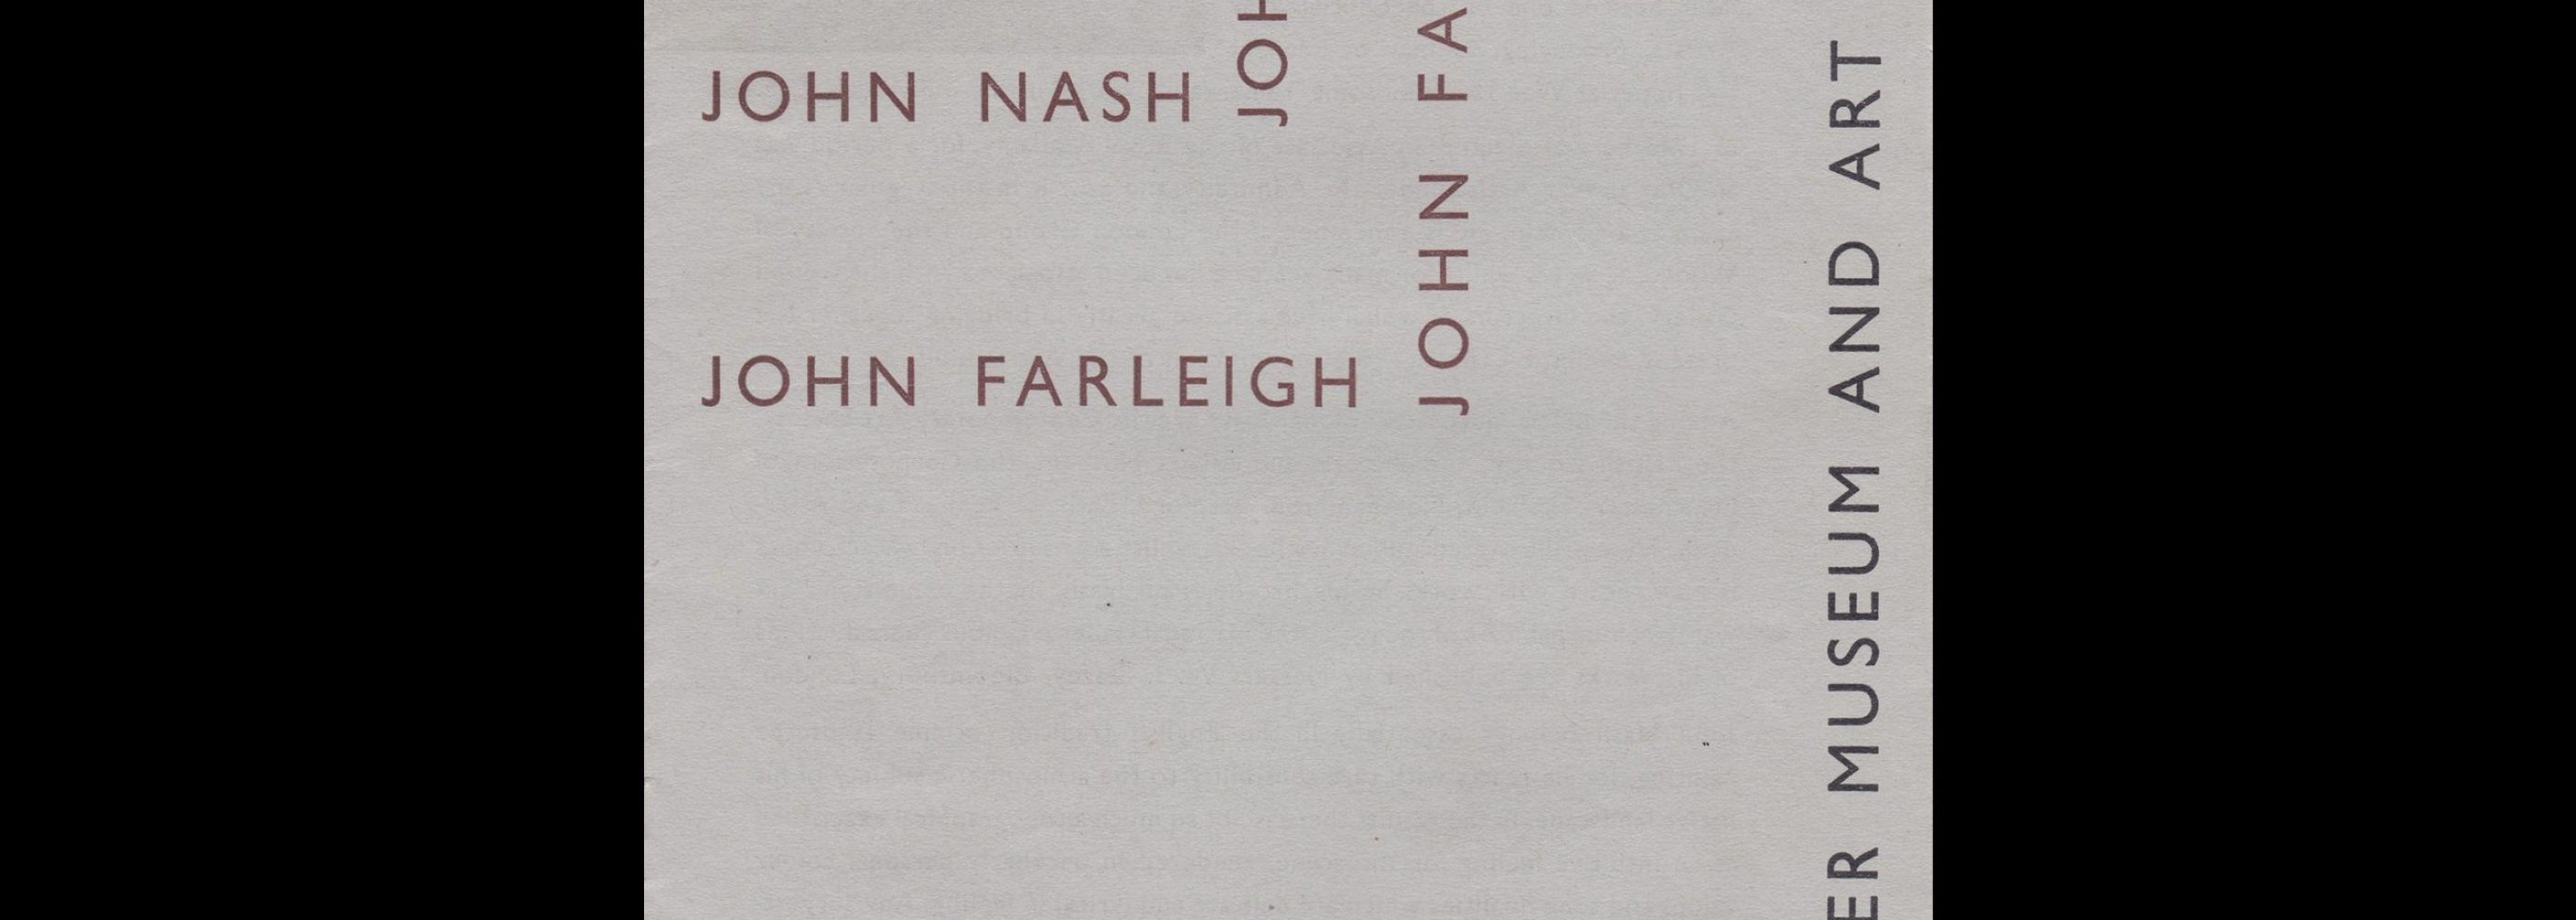 John Nash and John Farleigh, Leicester Museum and Art Gallery, 1941